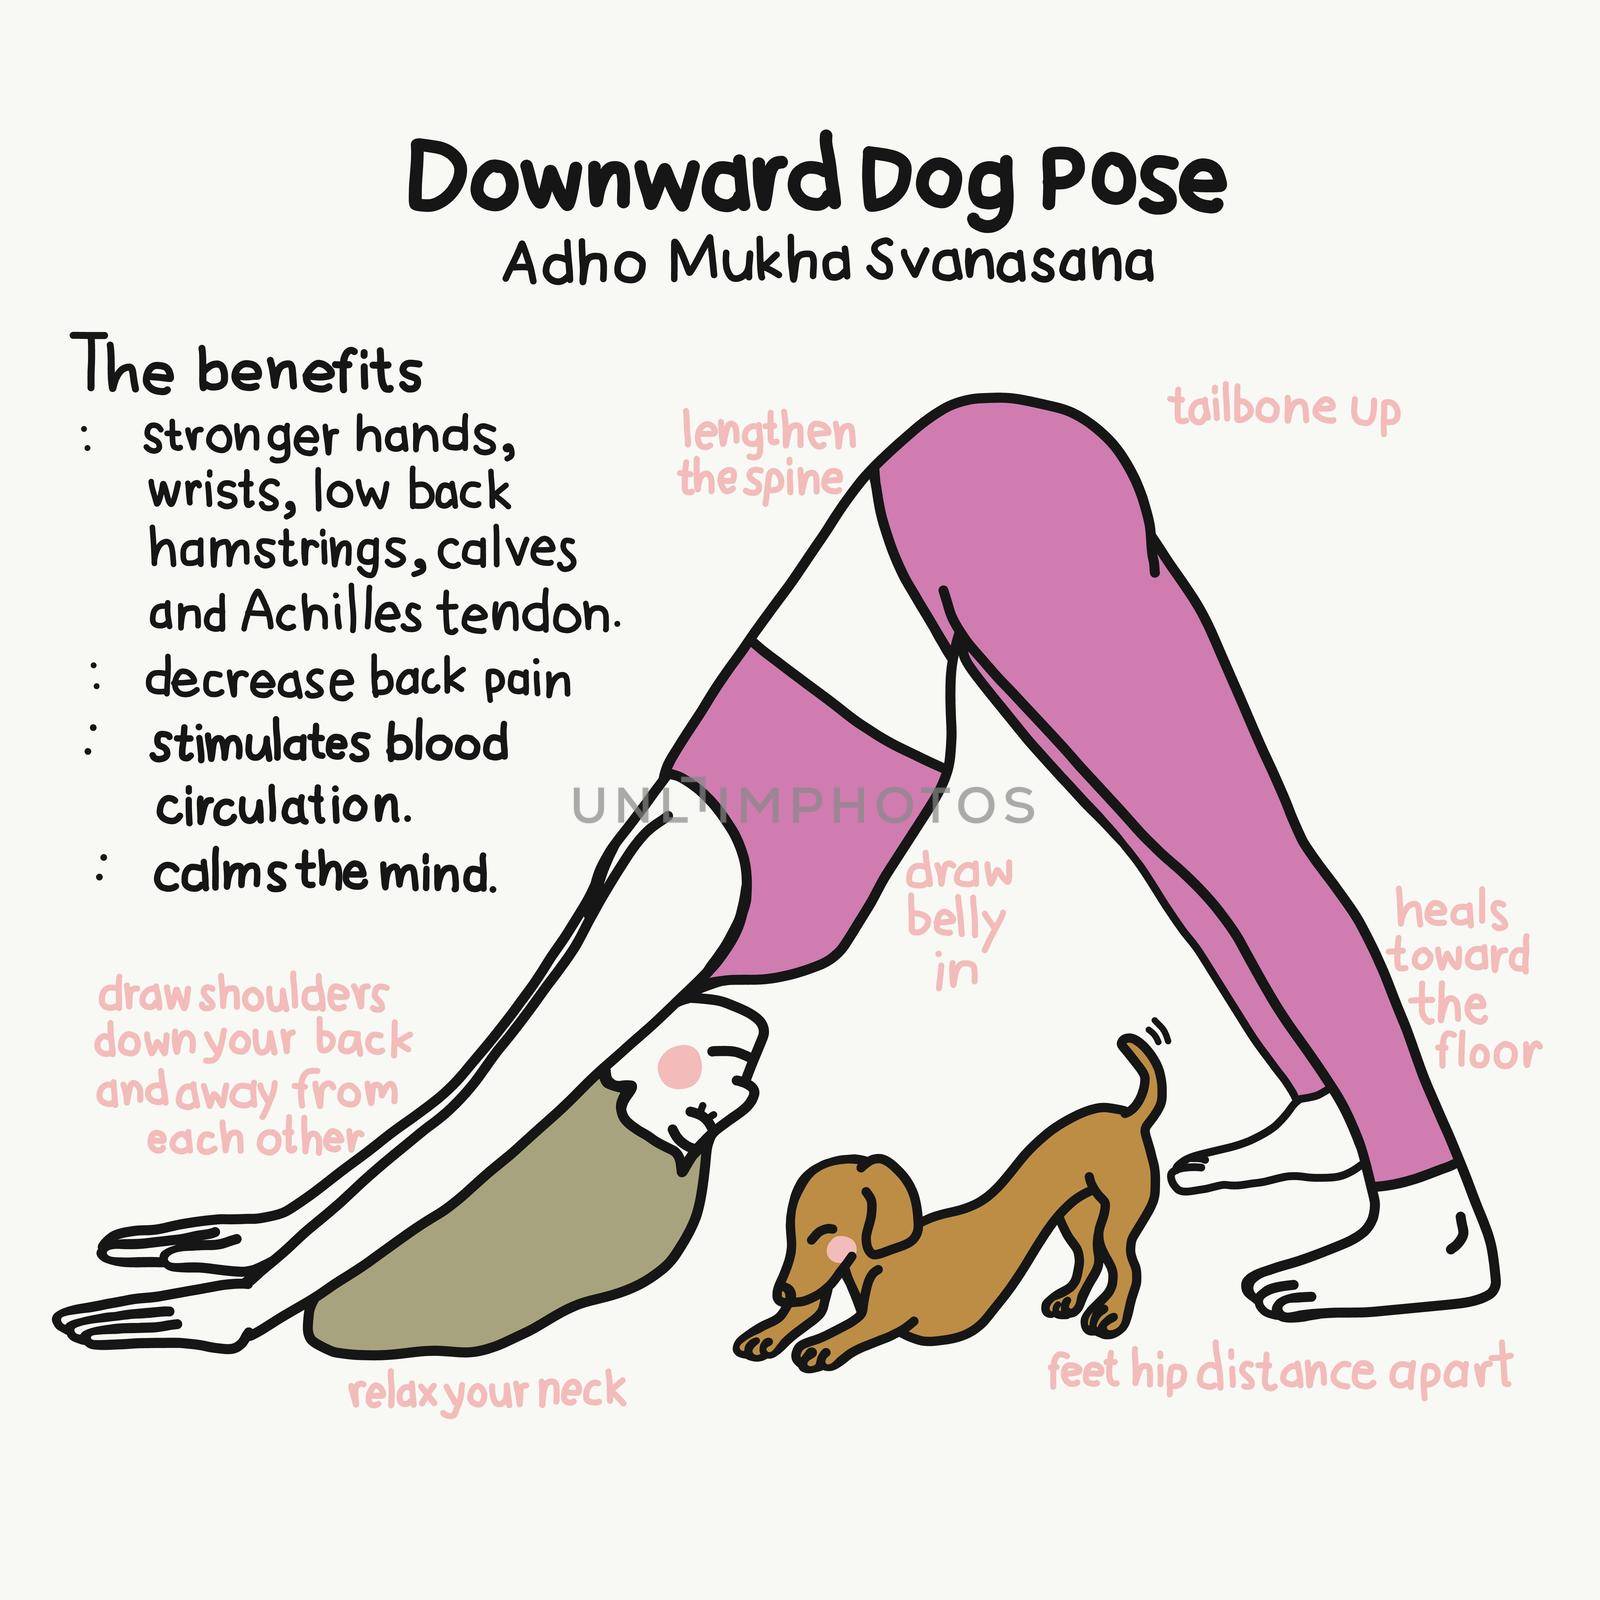 Downward Dog yoga pose and benefits cartoon vector illustration by Yoopho